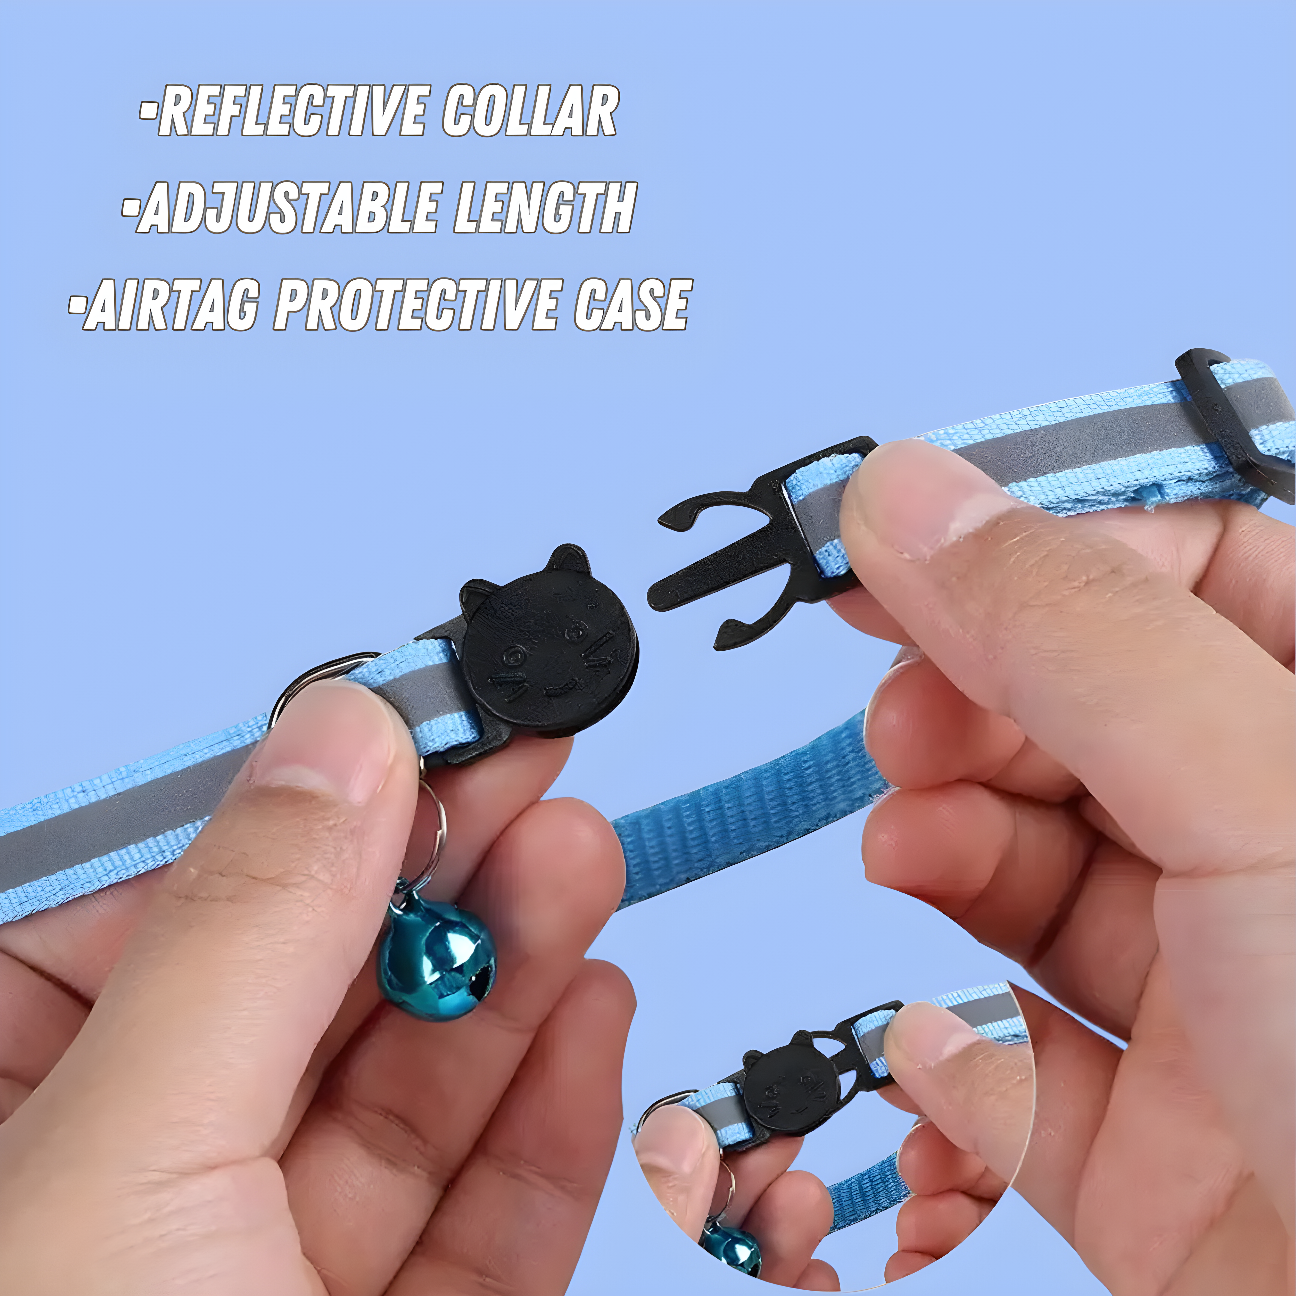 NEKO INU Reflective Airtag Collar - NEKO INU